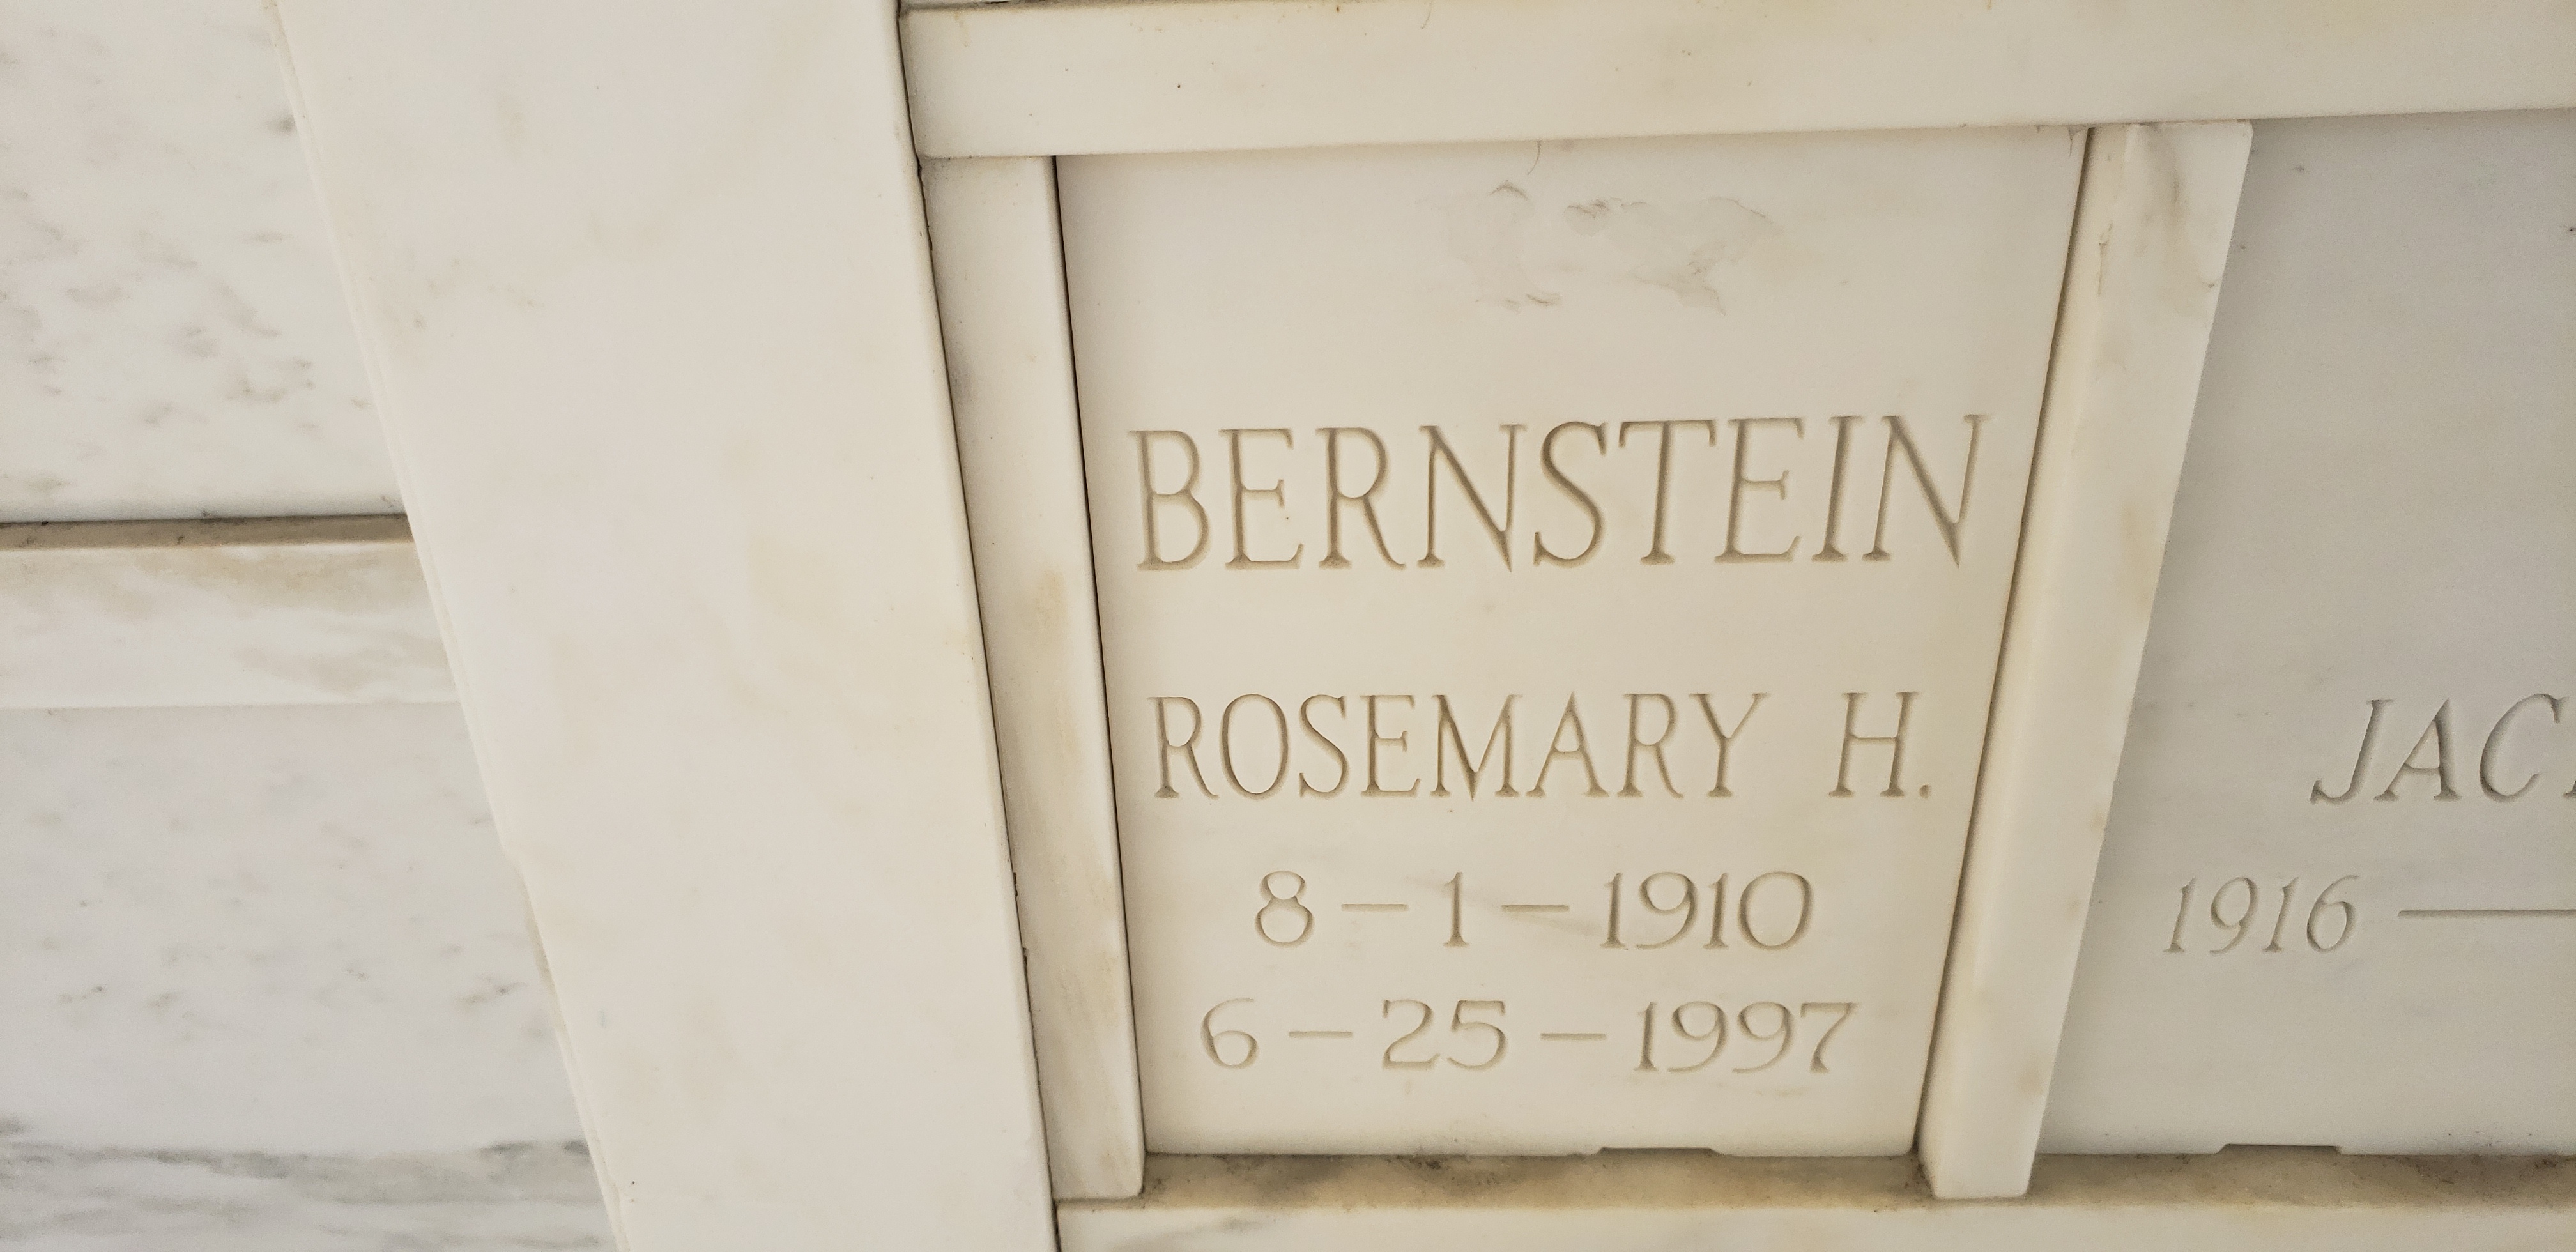 Rosemary H Bernstein